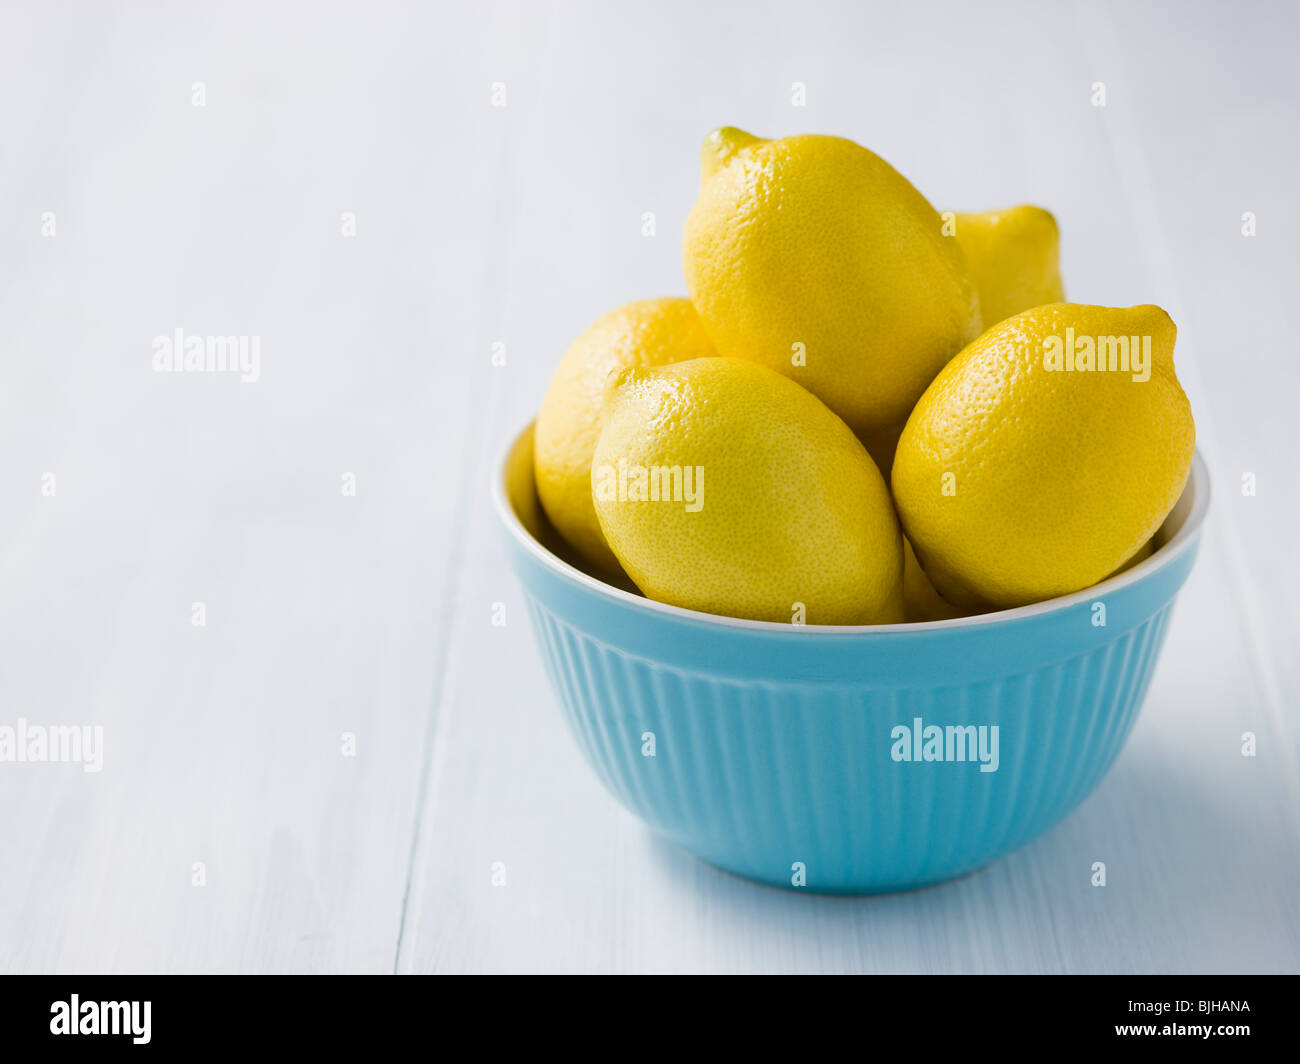 lemons in a blue bowl Stock Photo